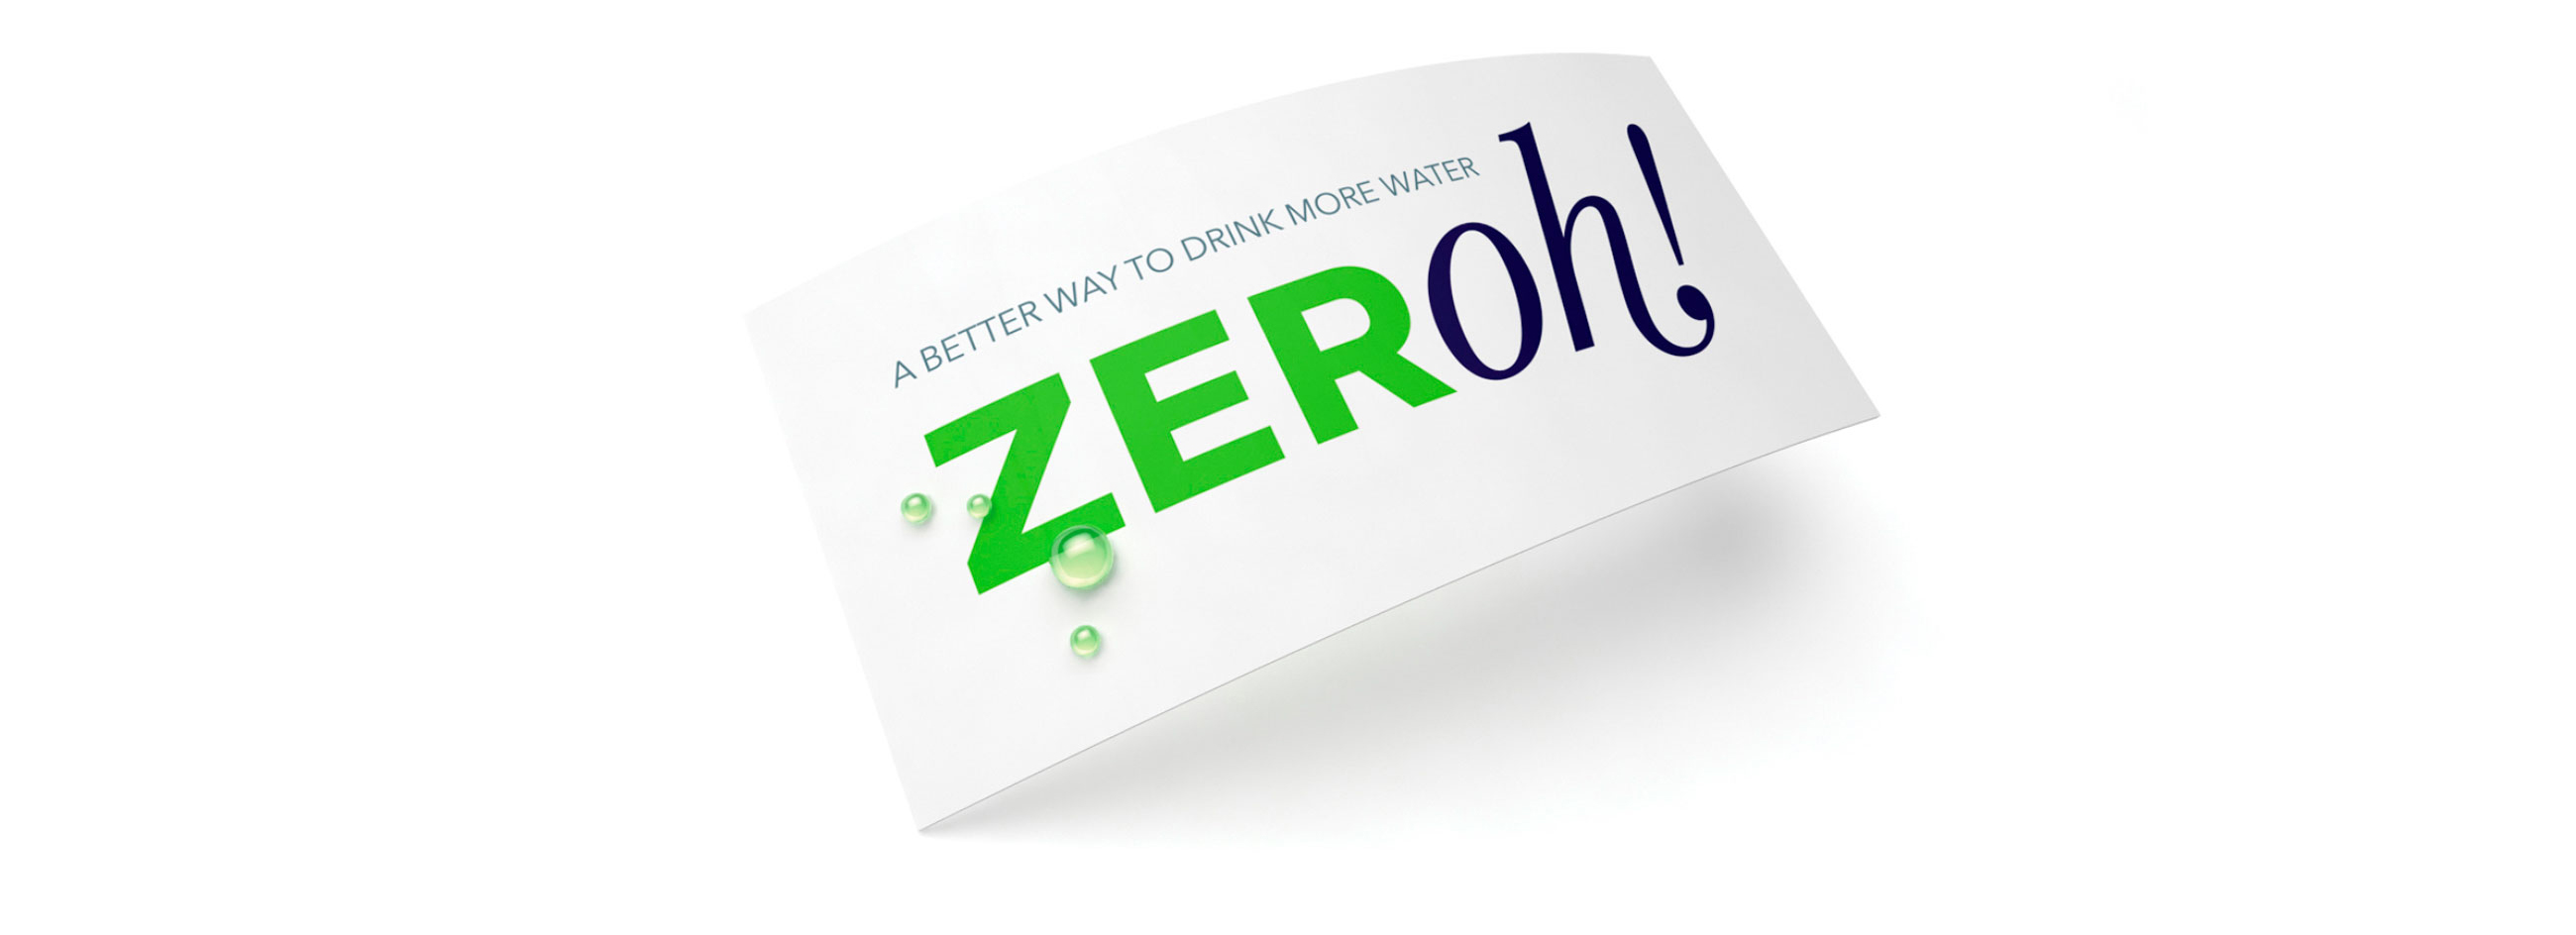 Lerum Zeroh saft cordial logo på etikett, label. Emballasje packaging design.